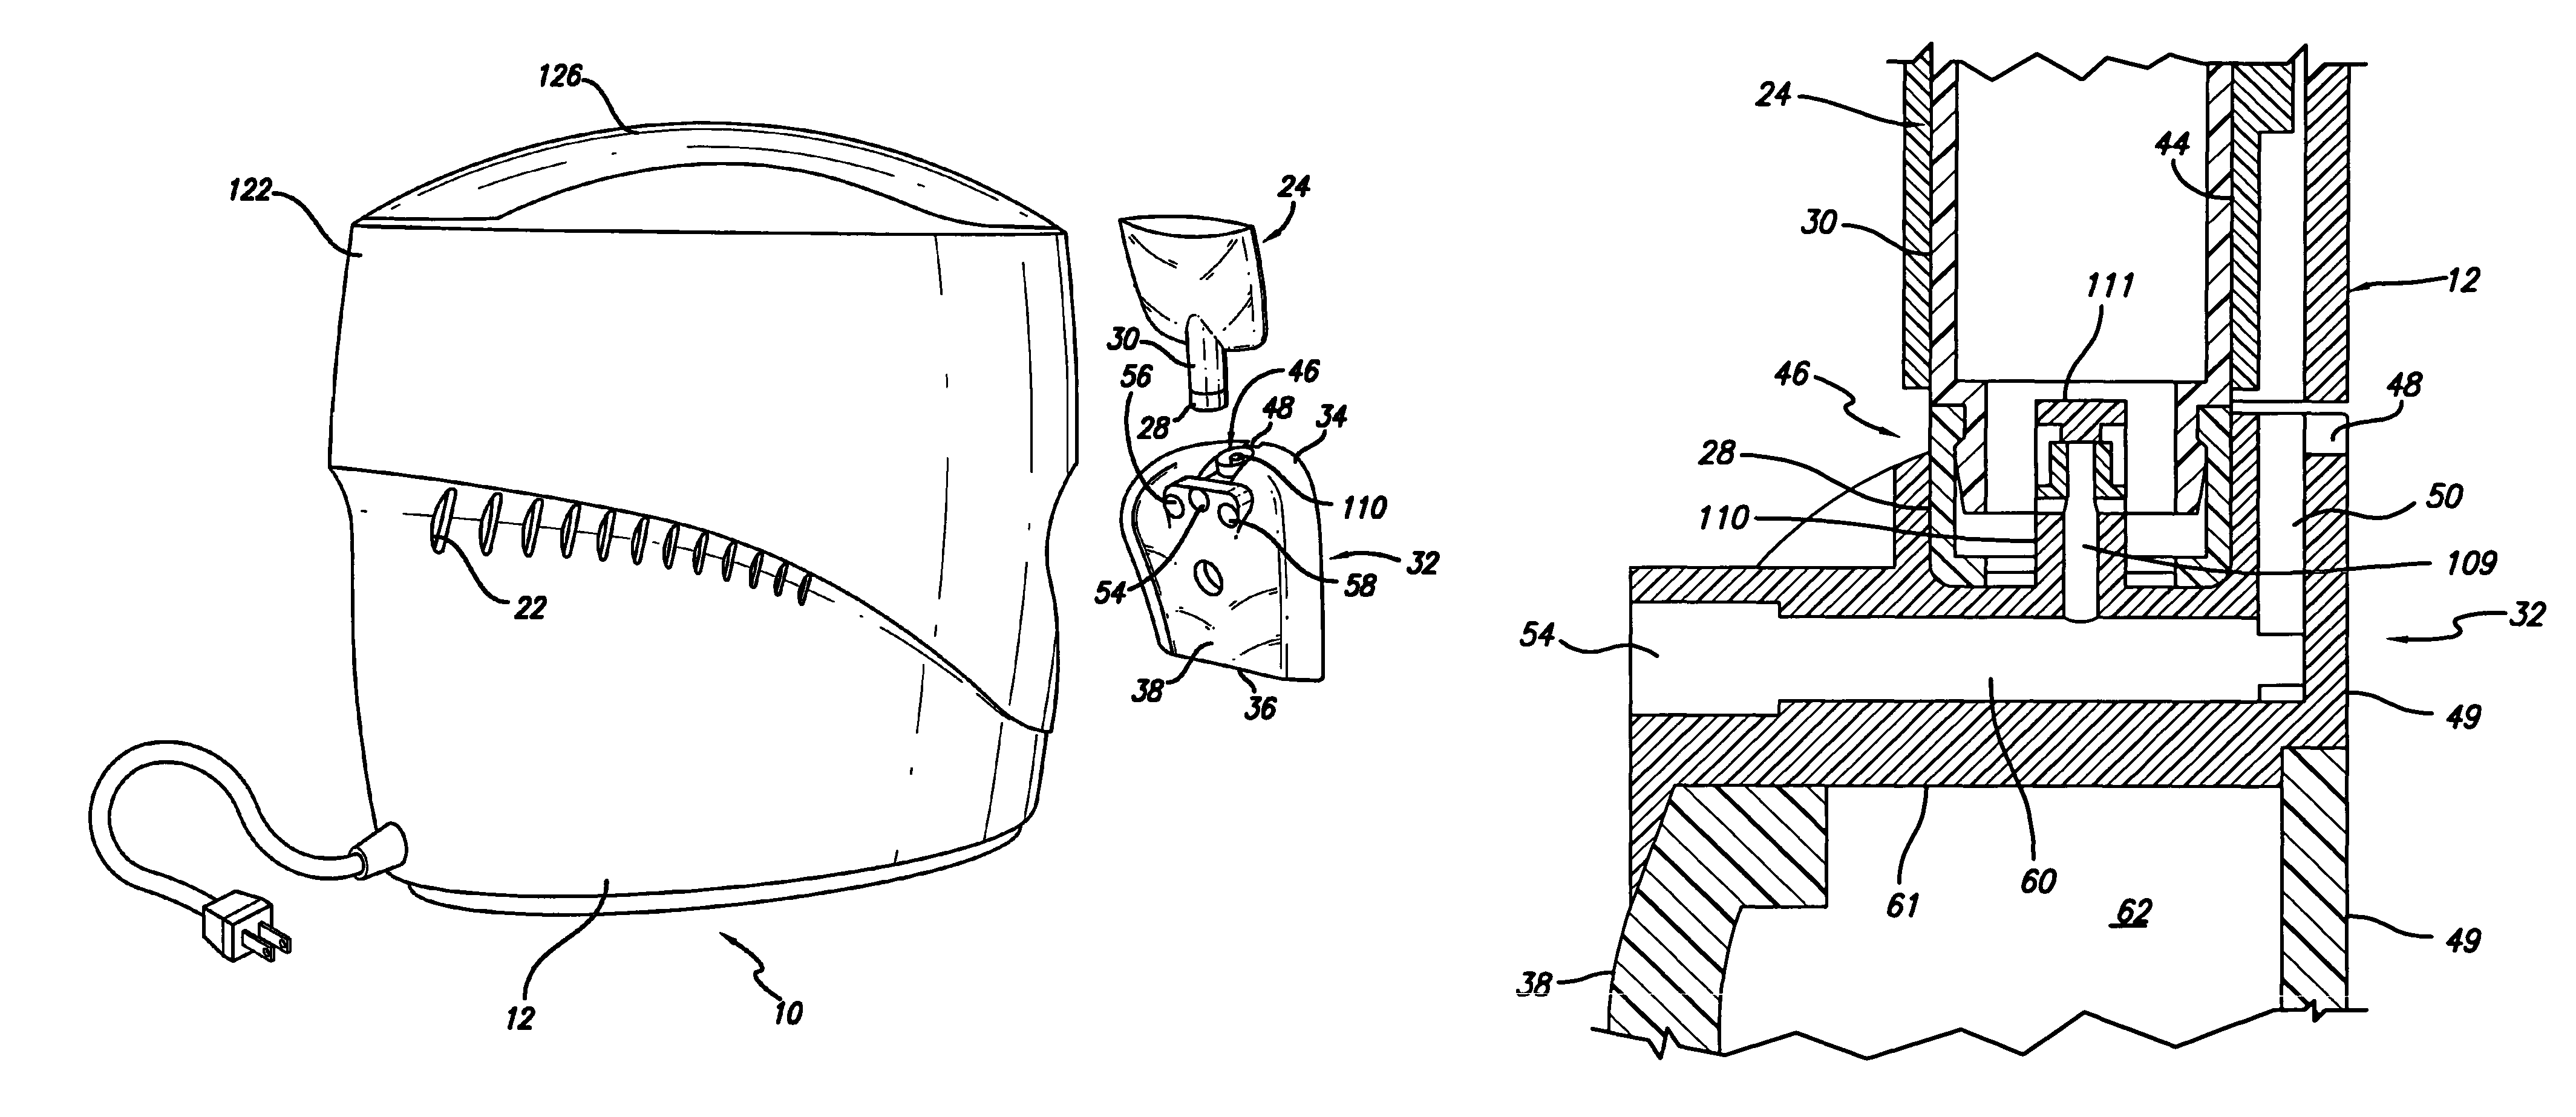 Portable microderm abrasion device